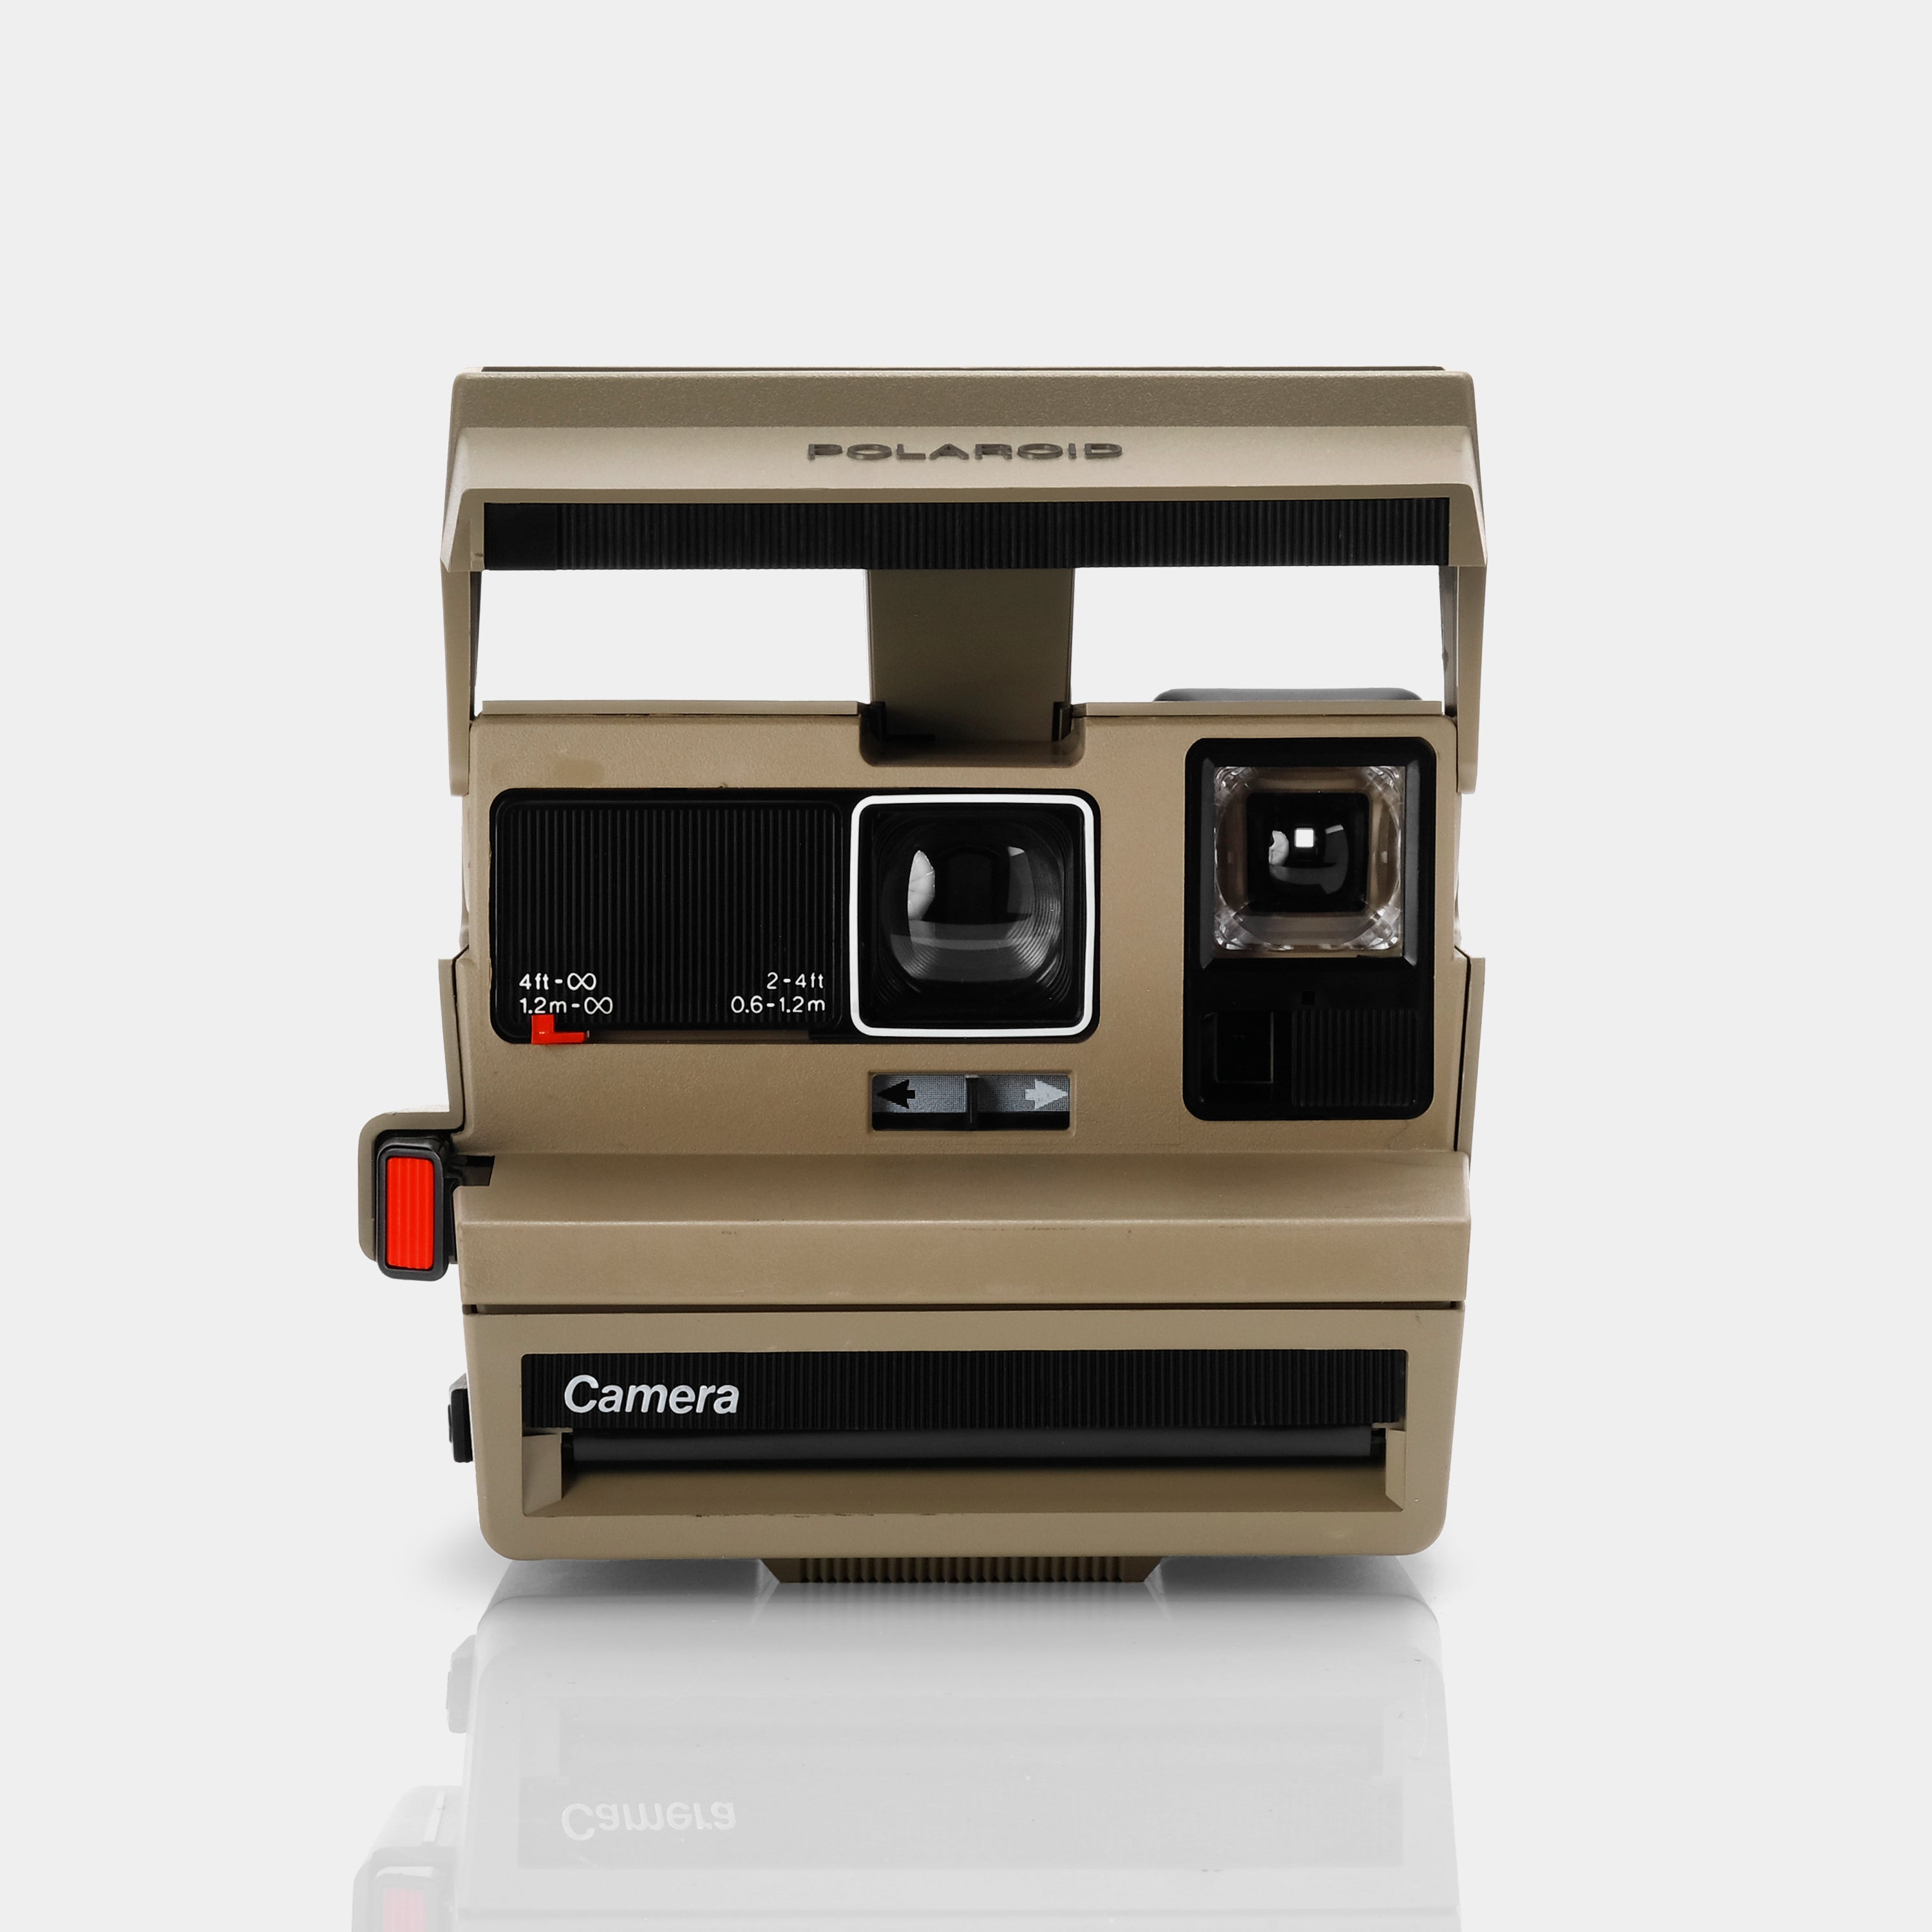 Rare Amigo Prototype "Camera" Polaroid 600 Tan Instant Film Camera